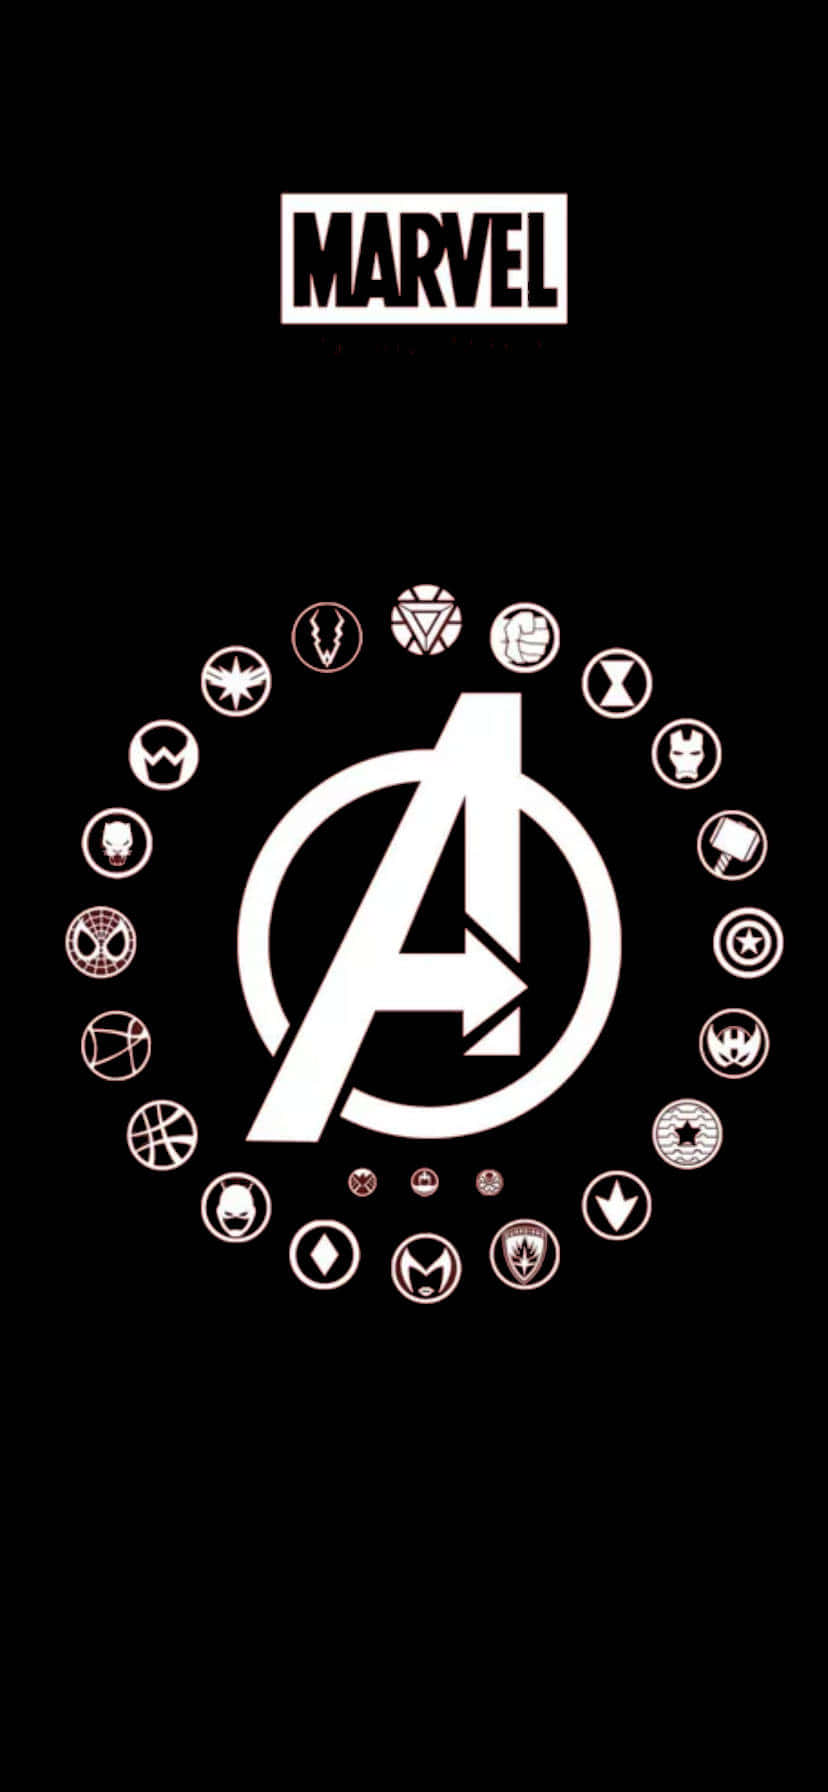 Fly Højt med Marvel Falcon Logo Wallpaper